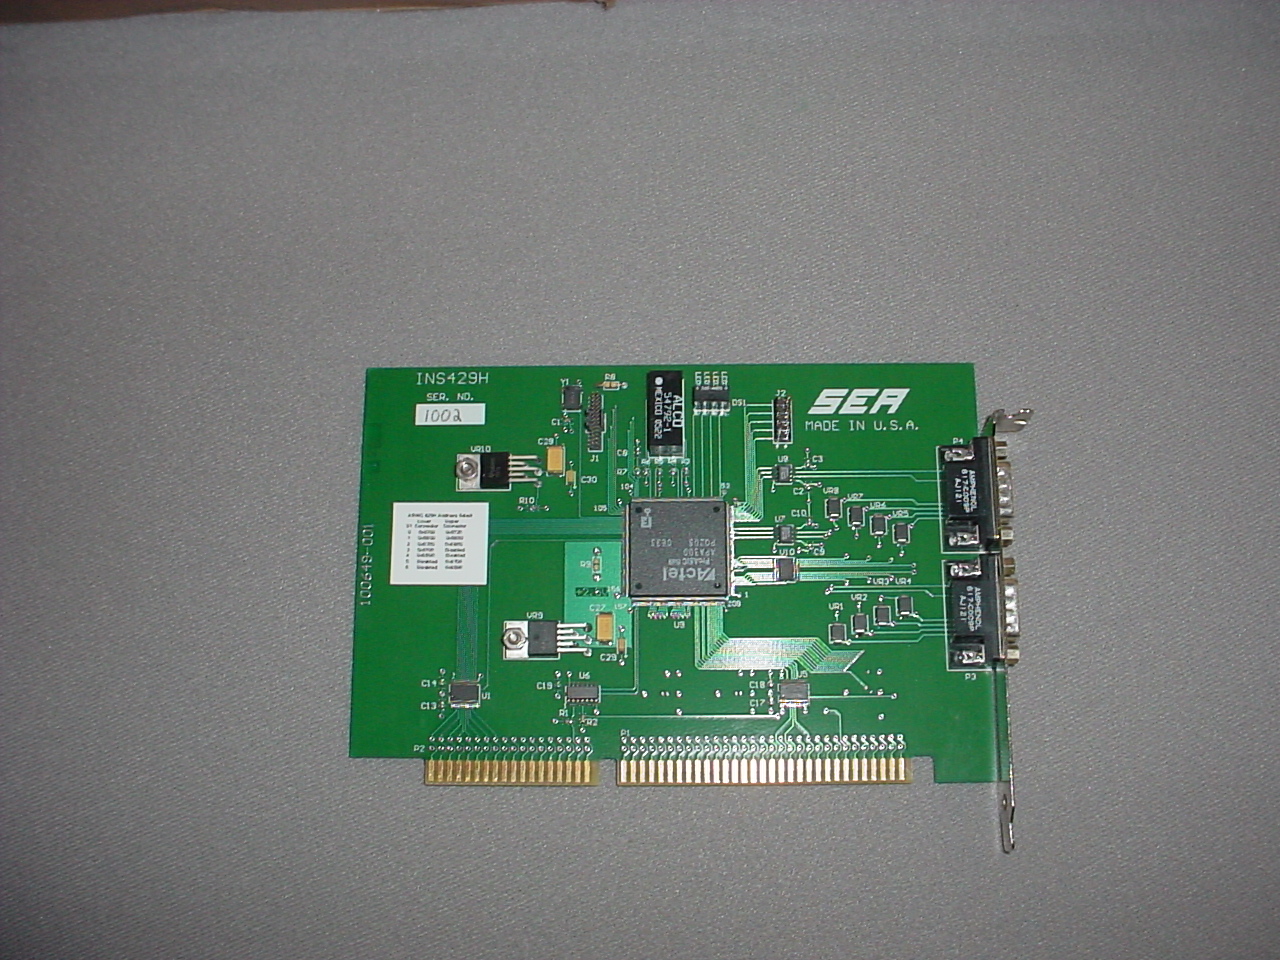 ARINC 429 Interface (Half Size)